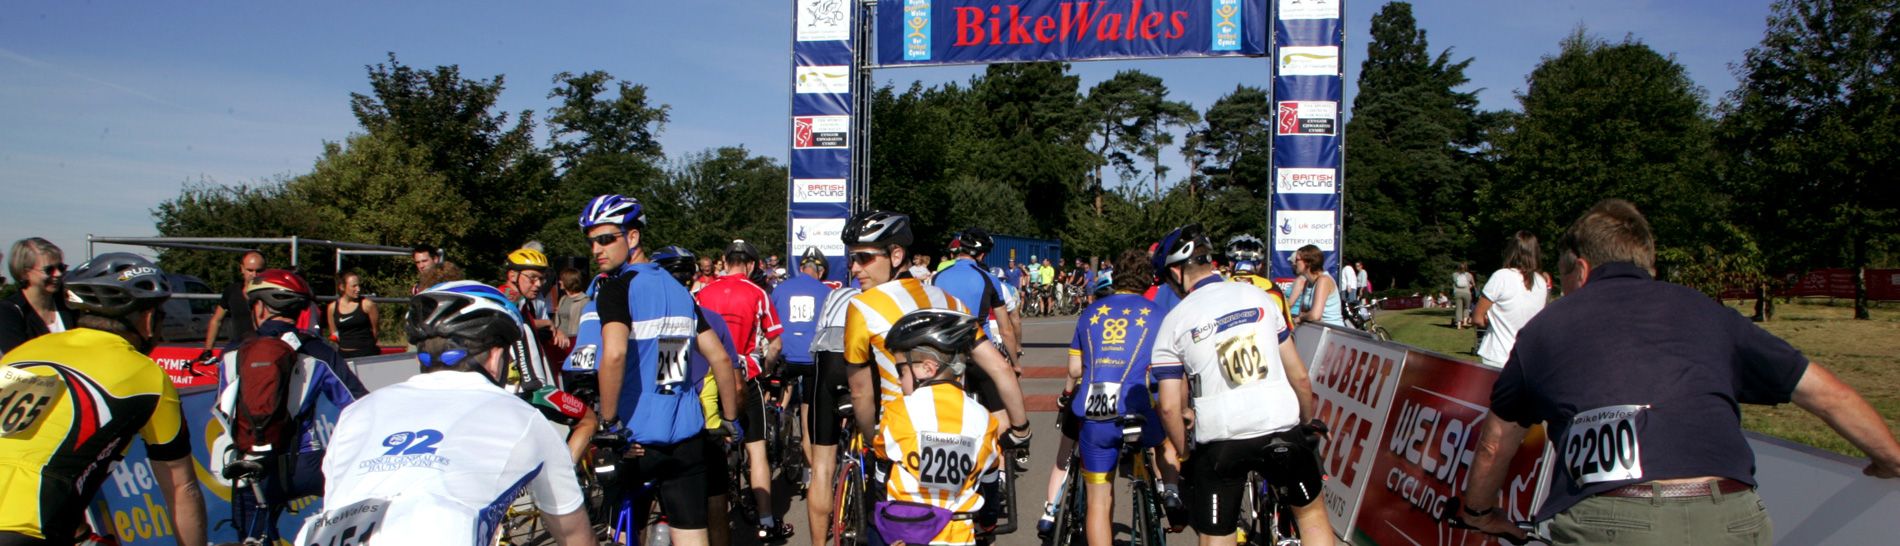 Bike Wales riders await the start Banner image